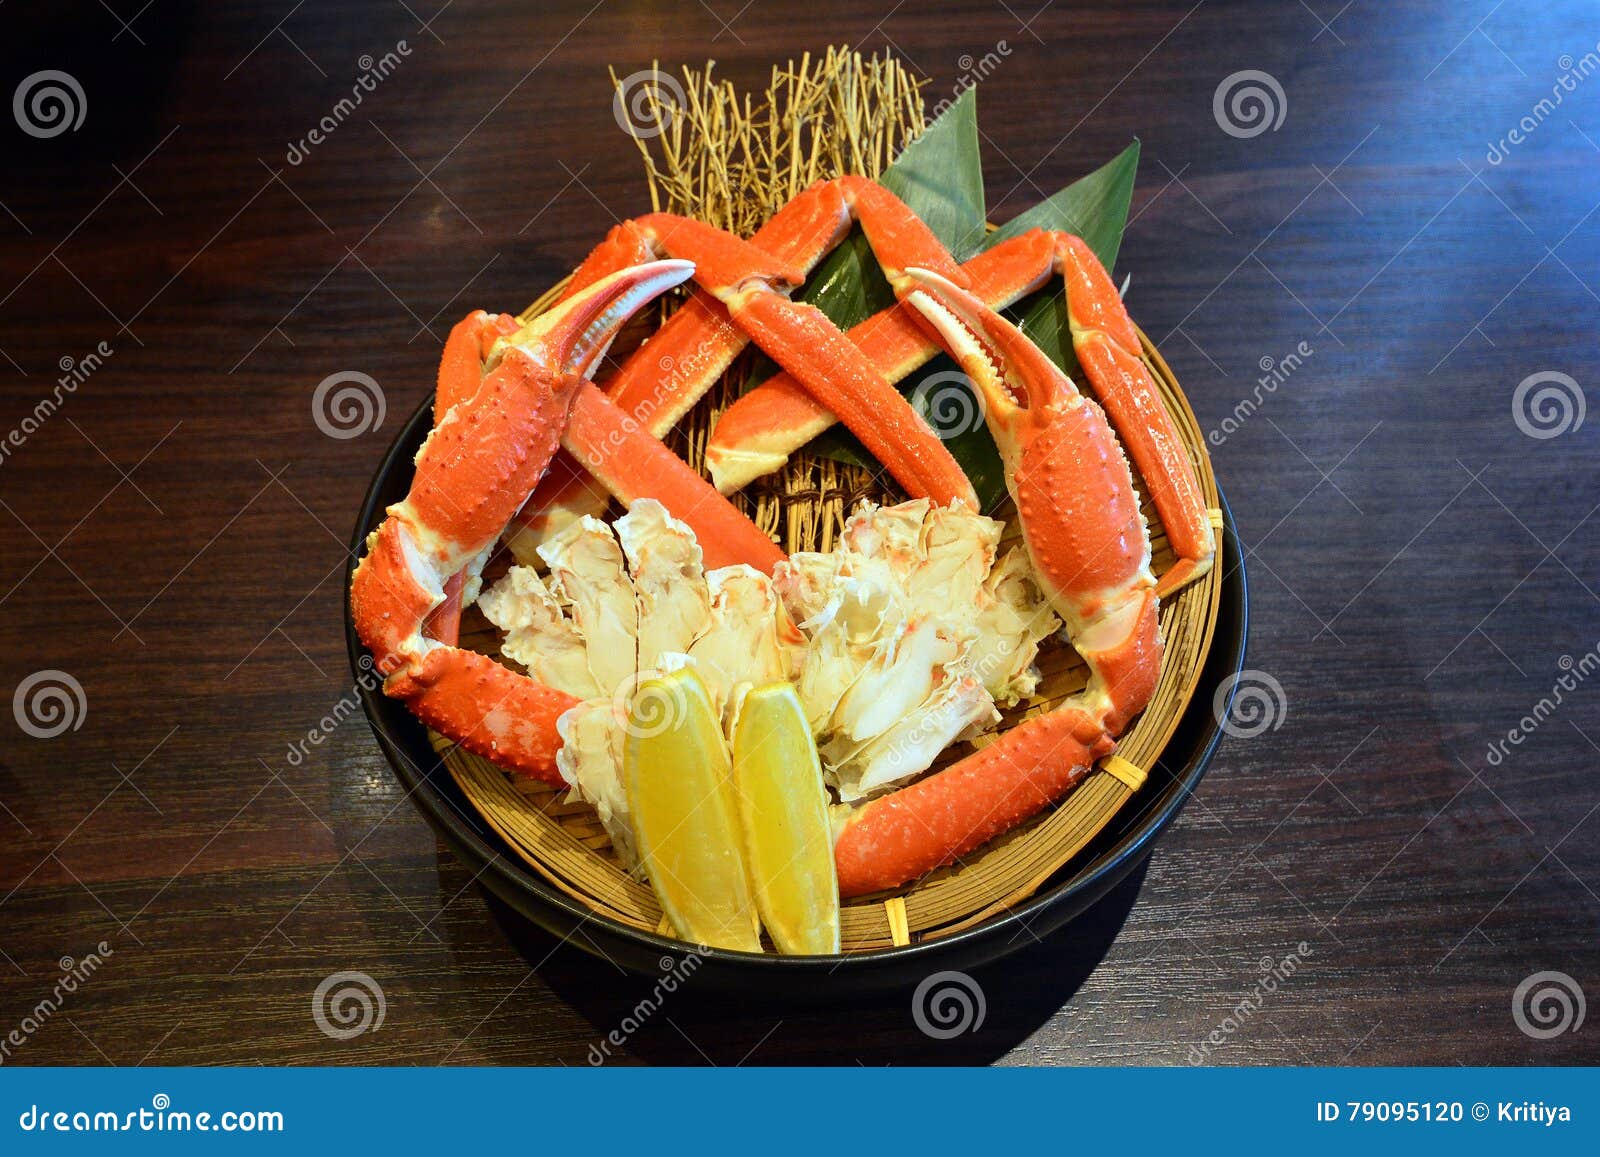 zuwai kani or zuwai crab, famous steam crab